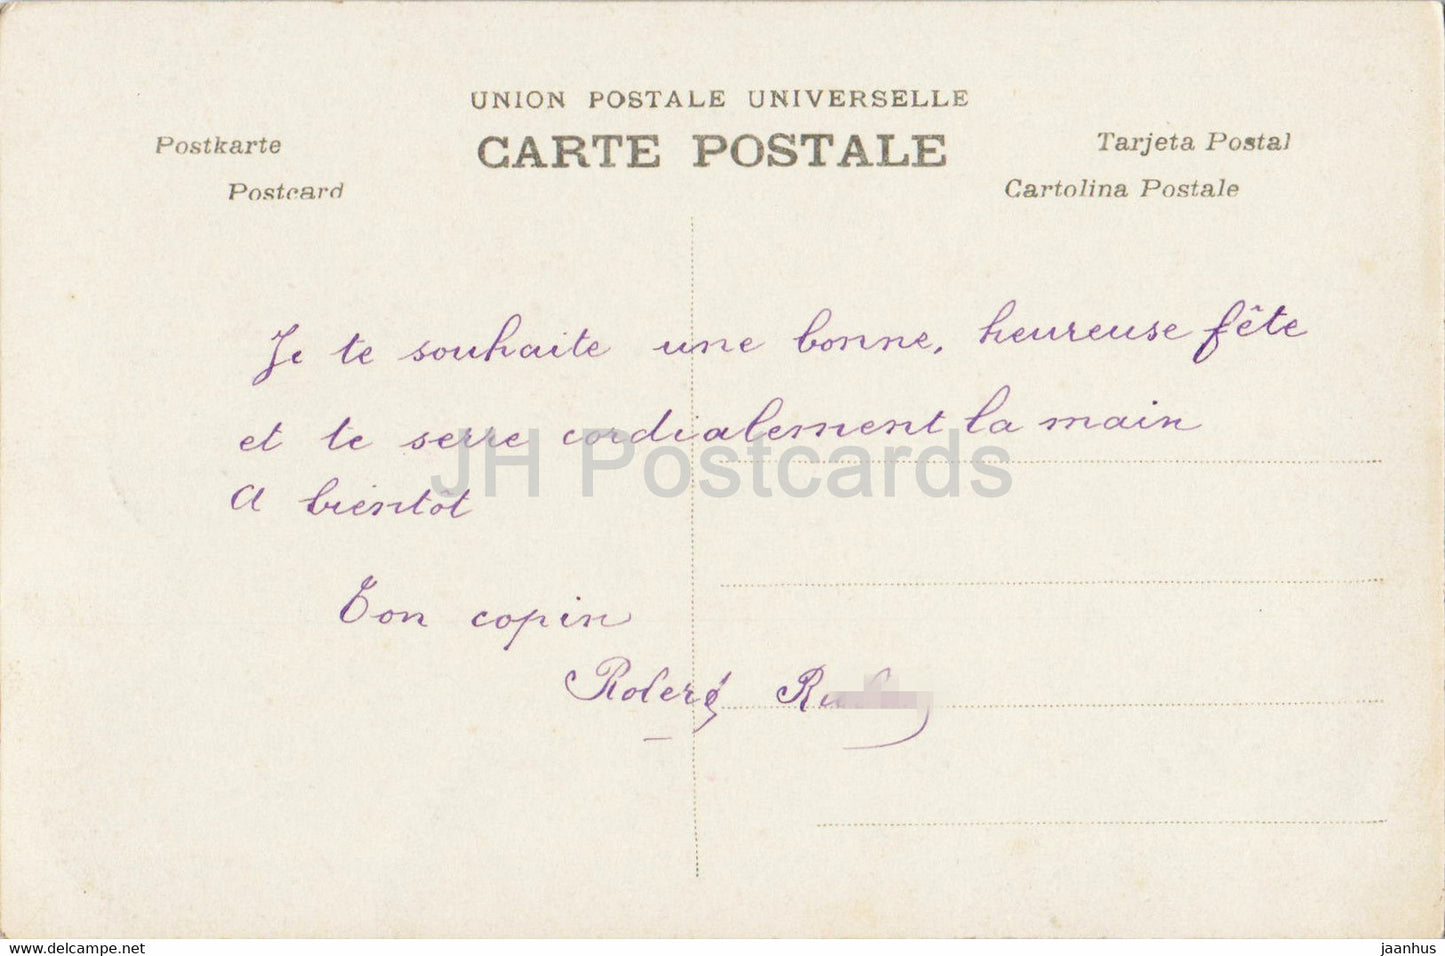 Birthday Greeting Card - Bonne Fete - boy - 1076 - AN Paris - old postcard - France - used